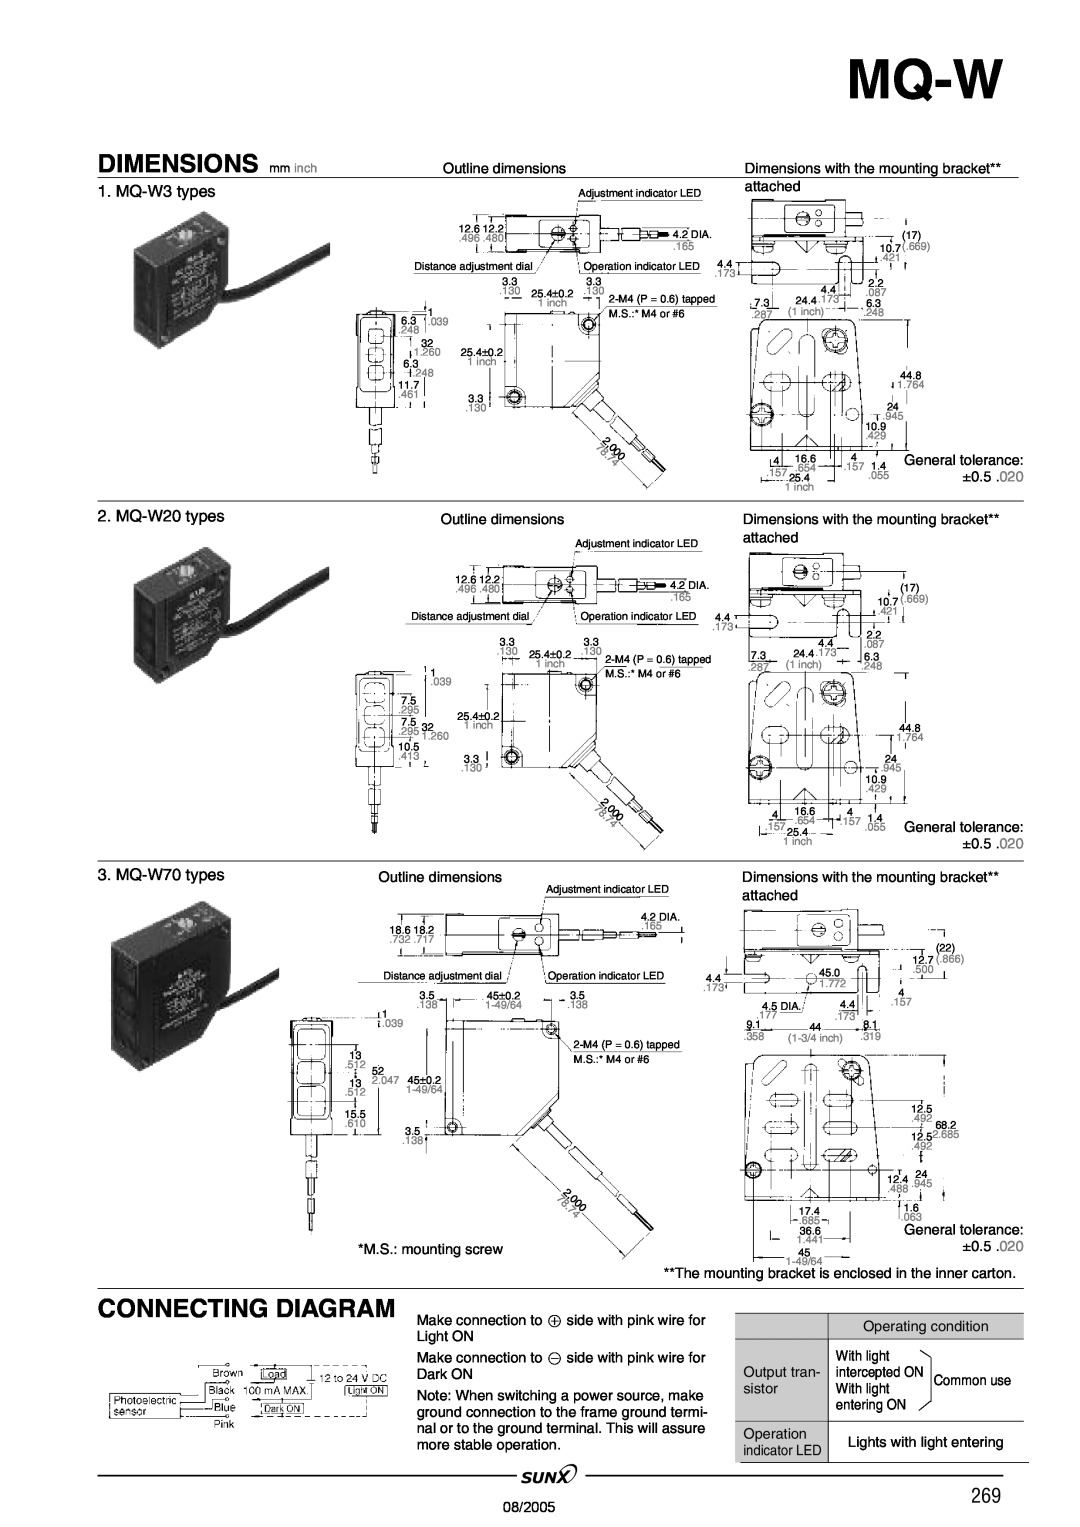 Panasonic MW-W20, MQ-W3 manual DIMENSIONS mm inch, Connecting Diagram, Mq-W, General tolerance, ±0.5 